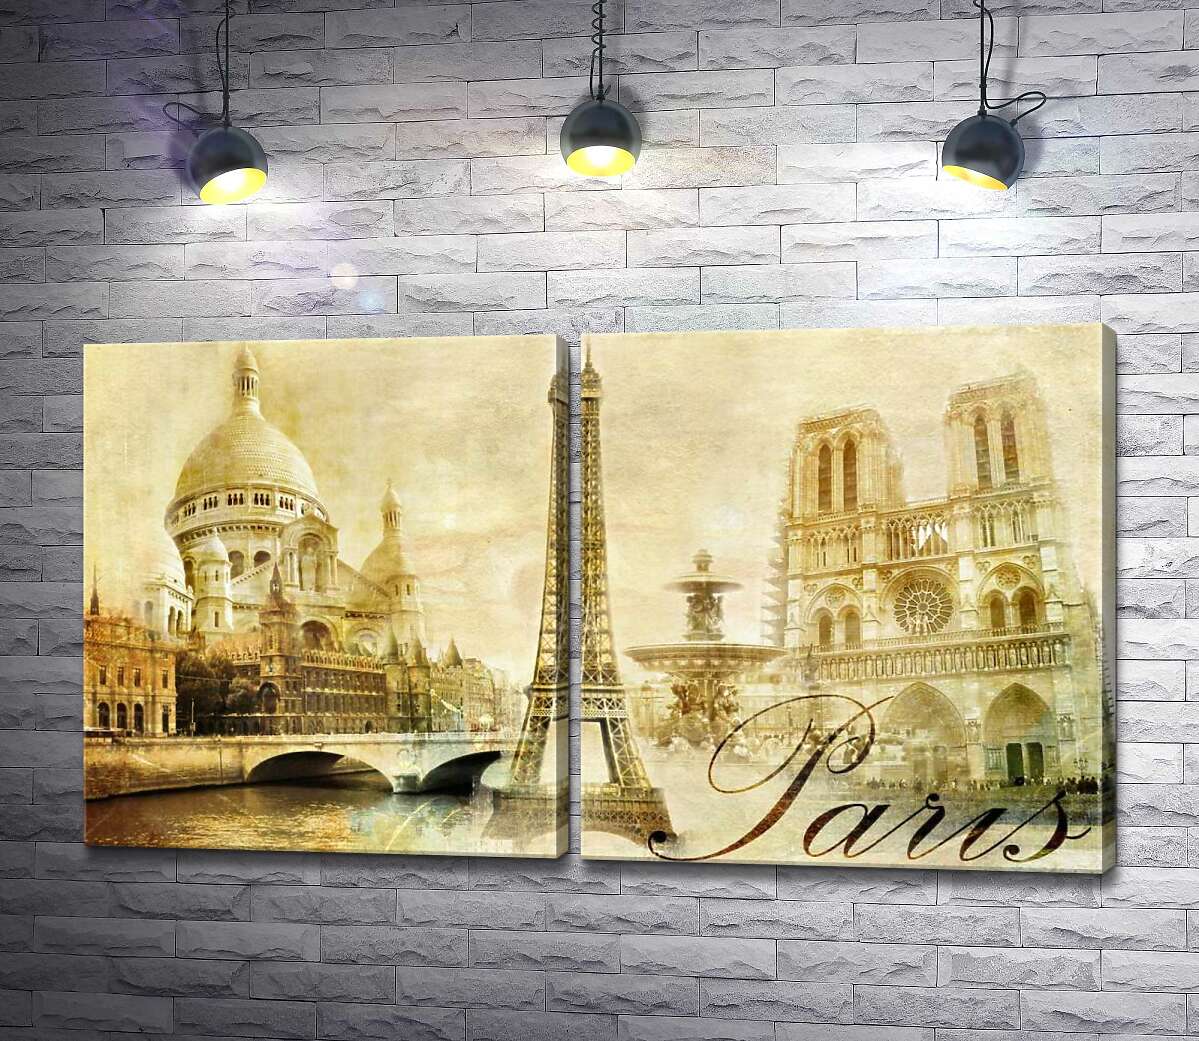 модульна картина Головні будівлі Парижу: Ейфелева вежа (Eiffel tower), Нотр-Дам-де-Парі (Notre dame de Paris) та базиліка Сакре-Кер (Basilique du Sacre Cœur)